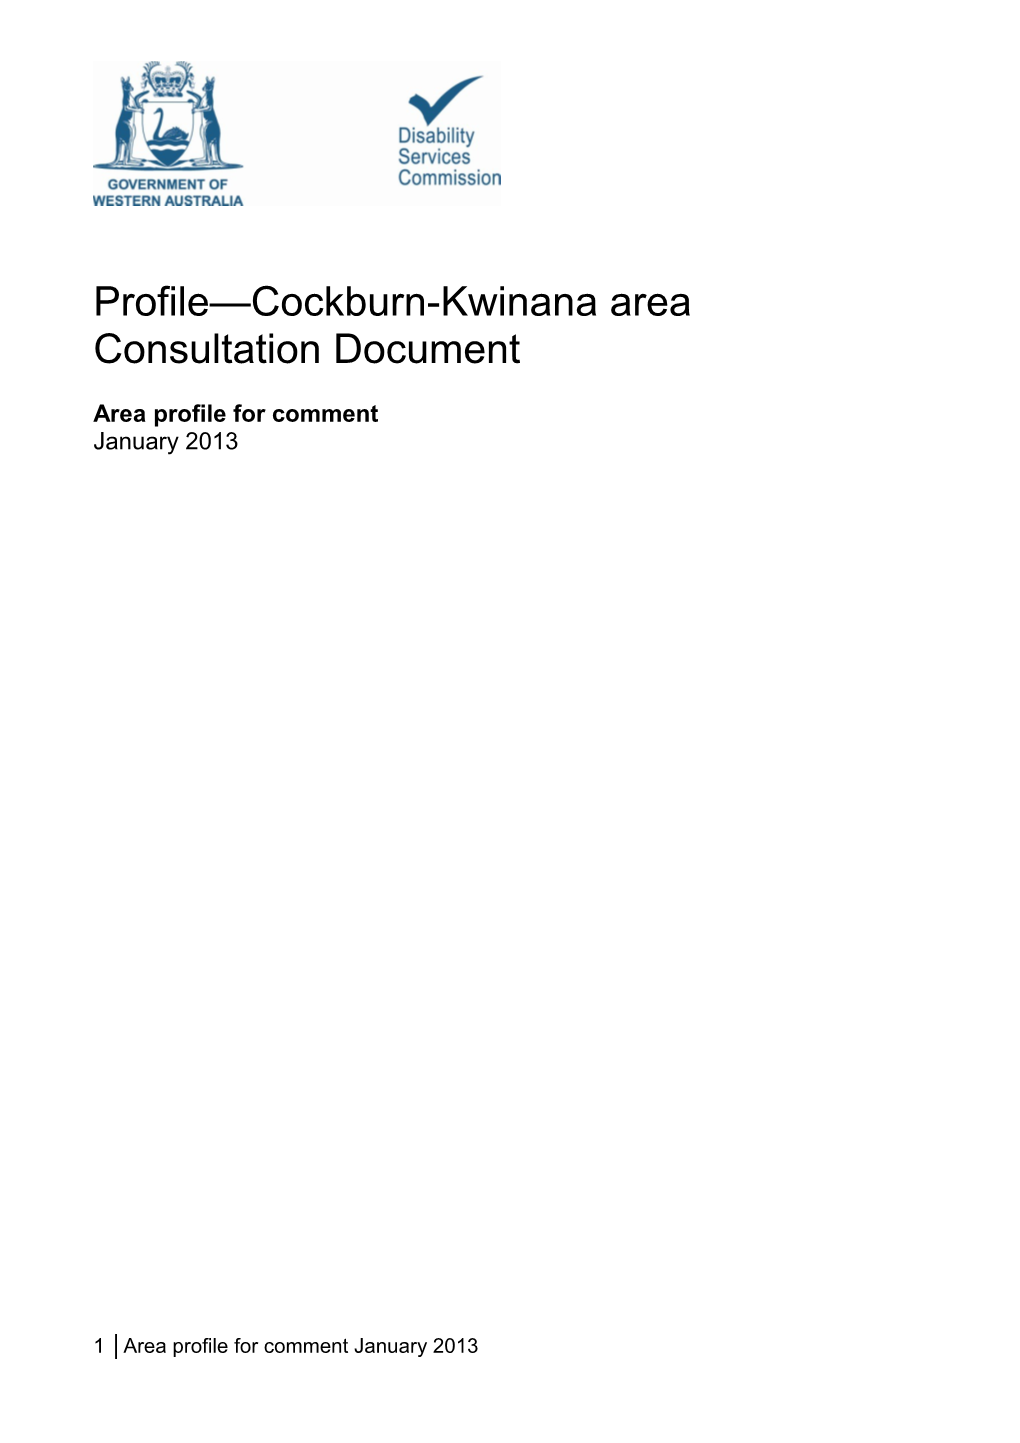 Cockburn-Kwinana Area Profile Consultation Document - Accessible